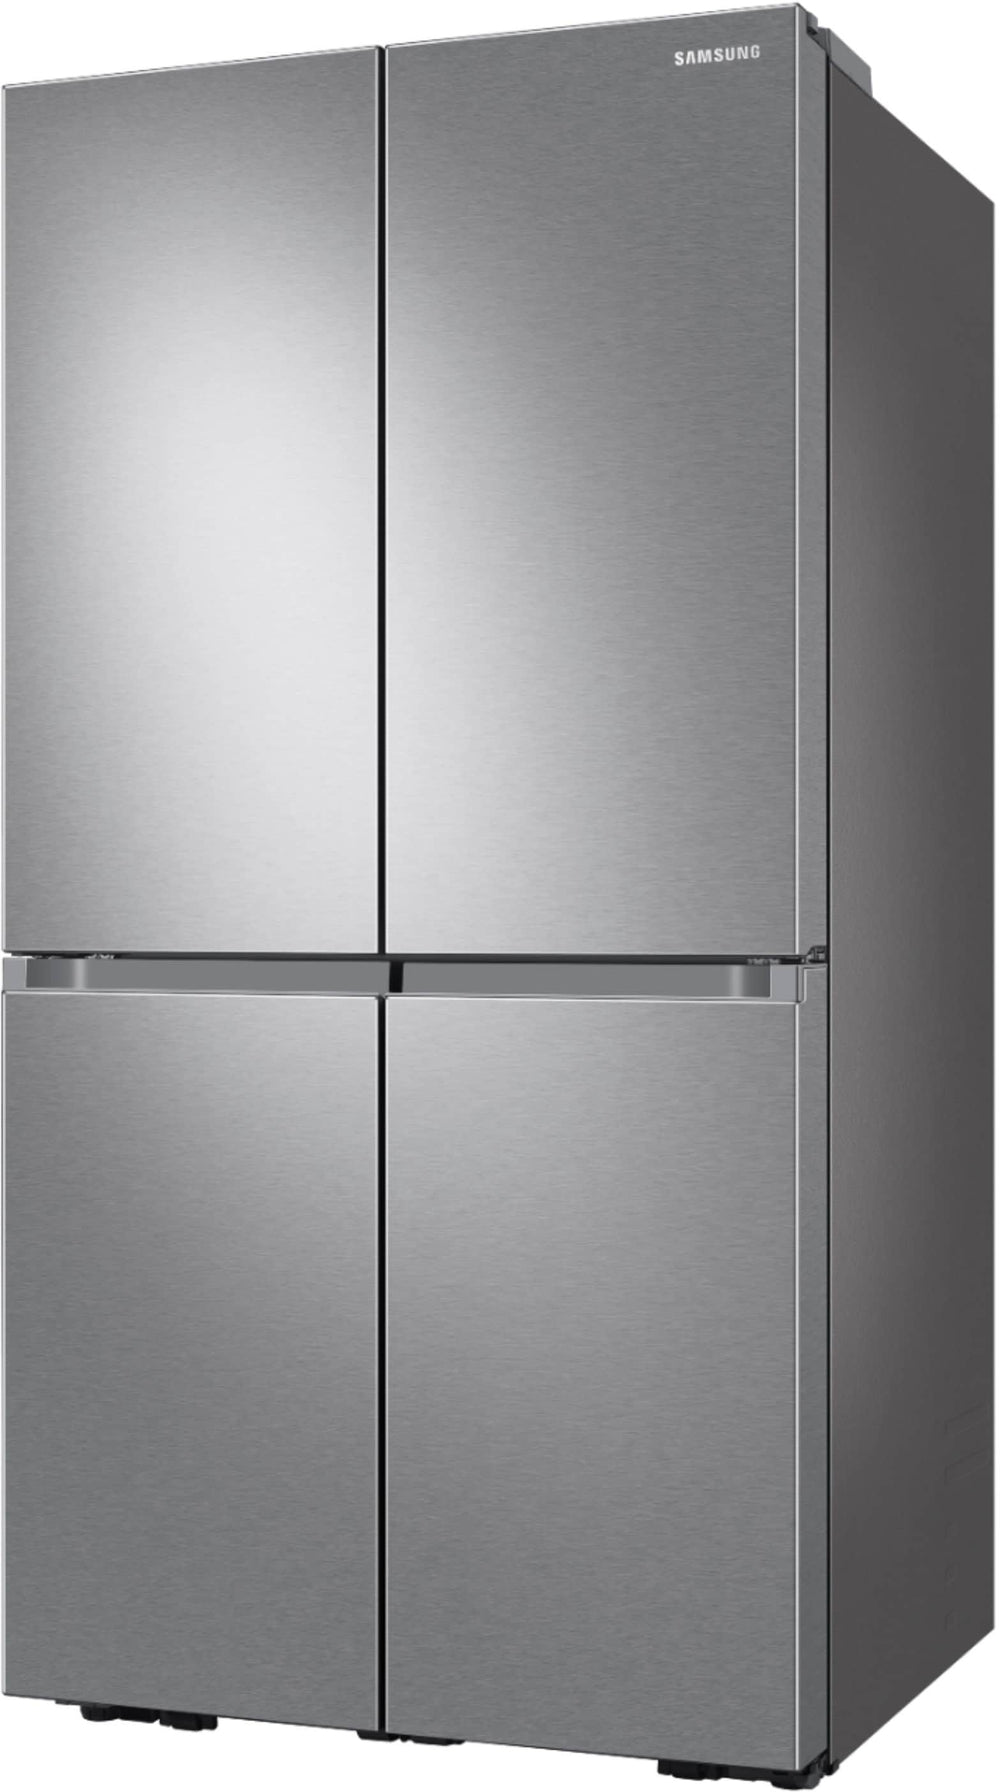 Samsung - 29 cu. ft. 4-Door Flex French Door Refrigerator with WiFi, Beverage Center and Dual Ice Maker - Stainless steel_1